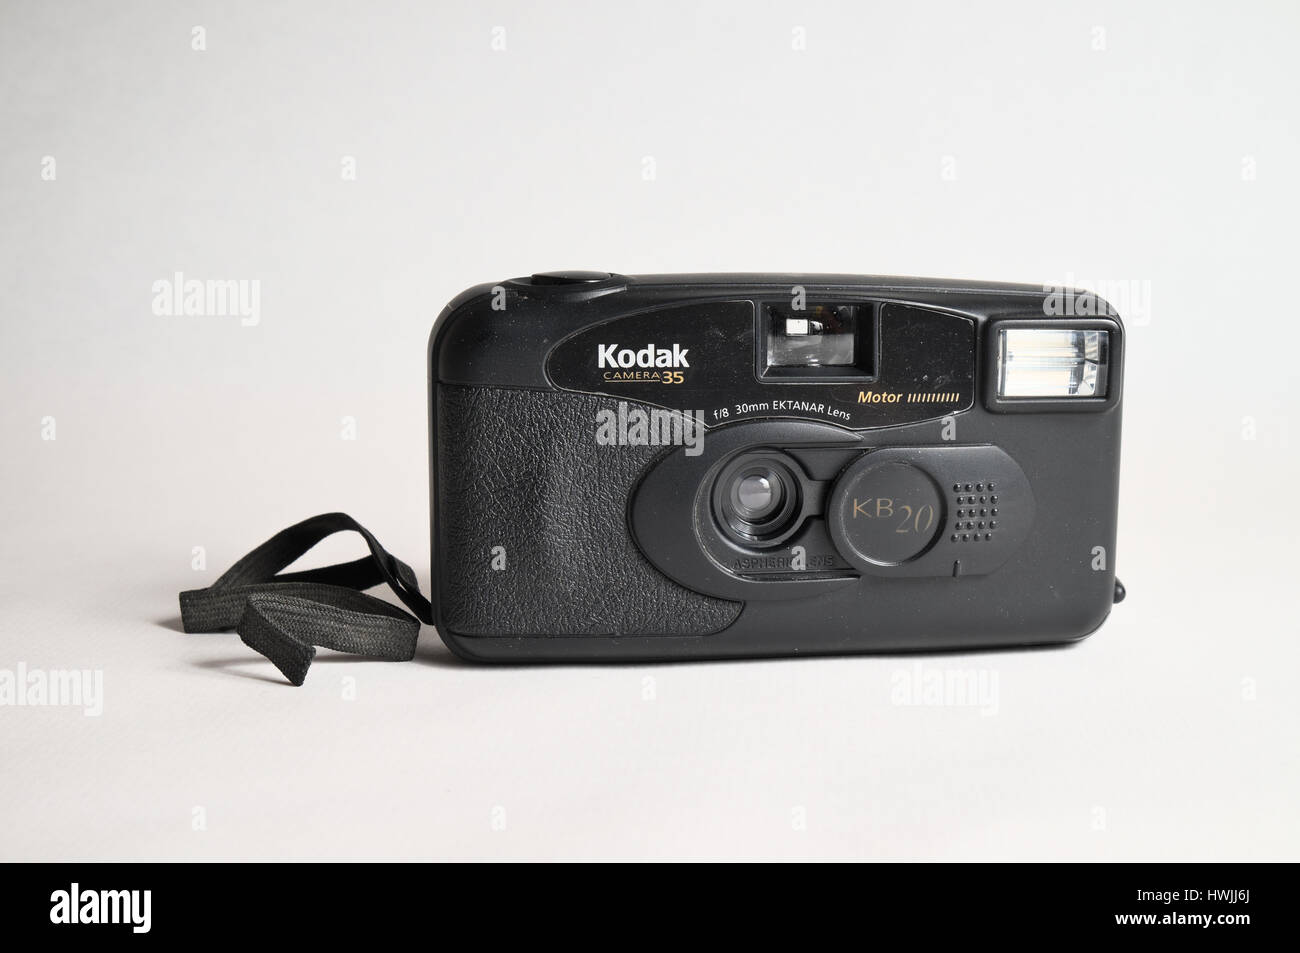 Antigua cámara analógica de Kodak, modelo kb20. Cámara compacta de película  de 35 mm con lente ektanar 30mm a f/8, la velocidad de obturación de 1/100.  Hecho en México Fotografía de stock - Alamy